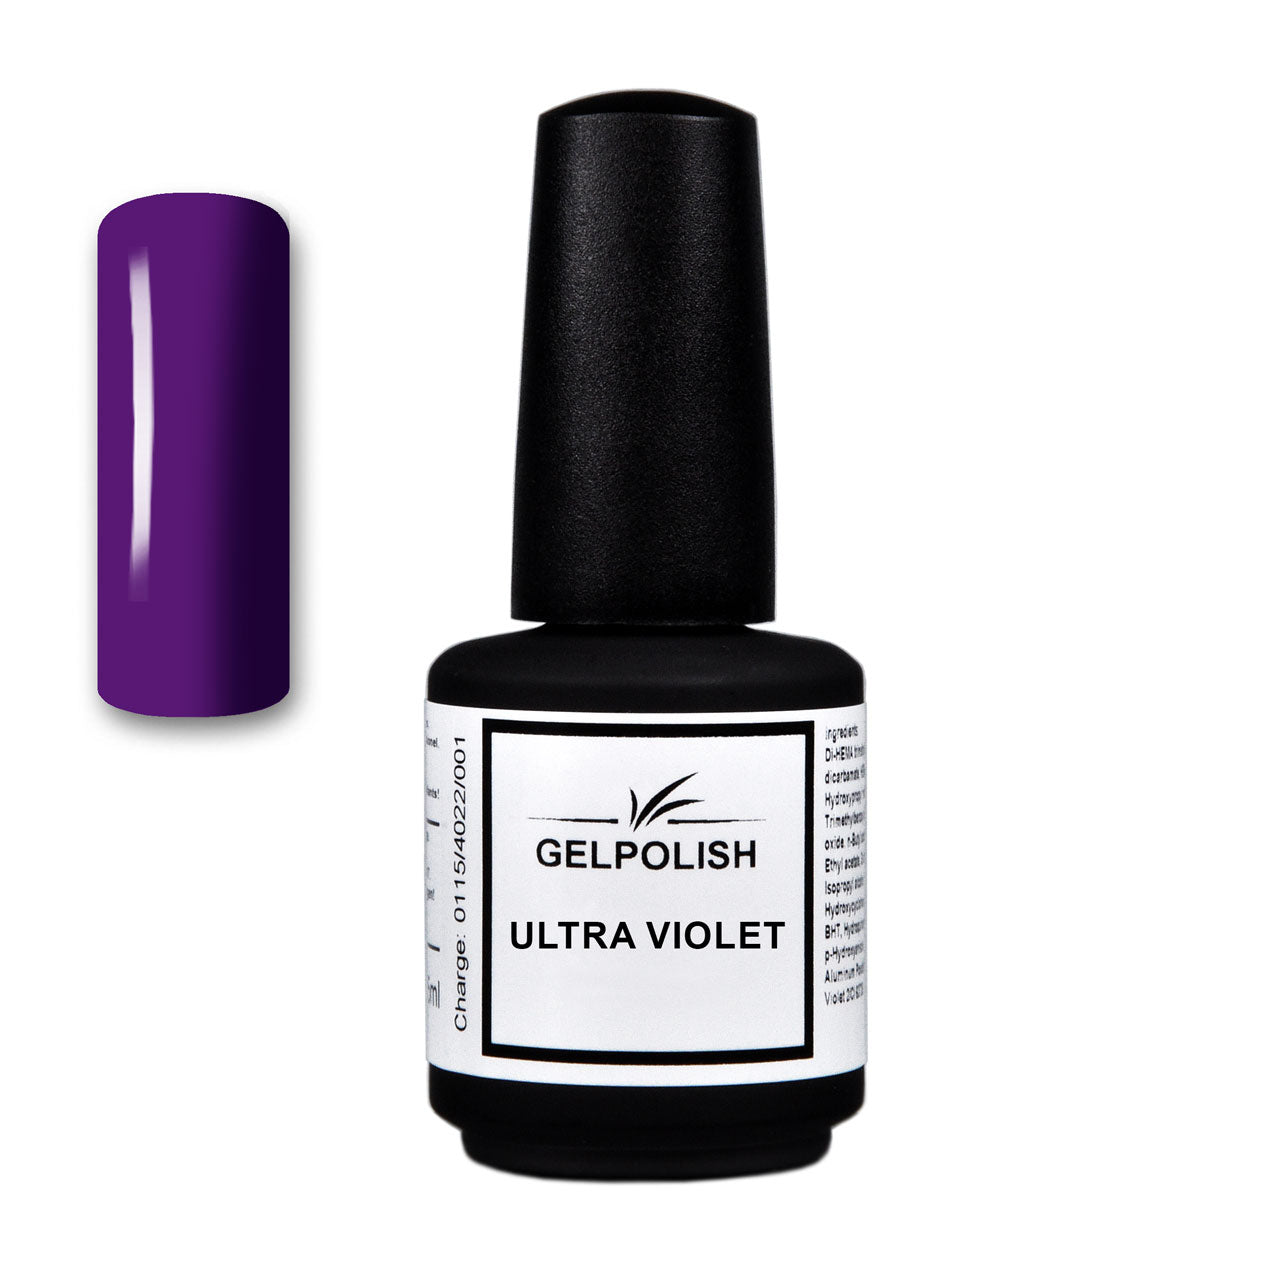 Gelpolish Ultra Violet